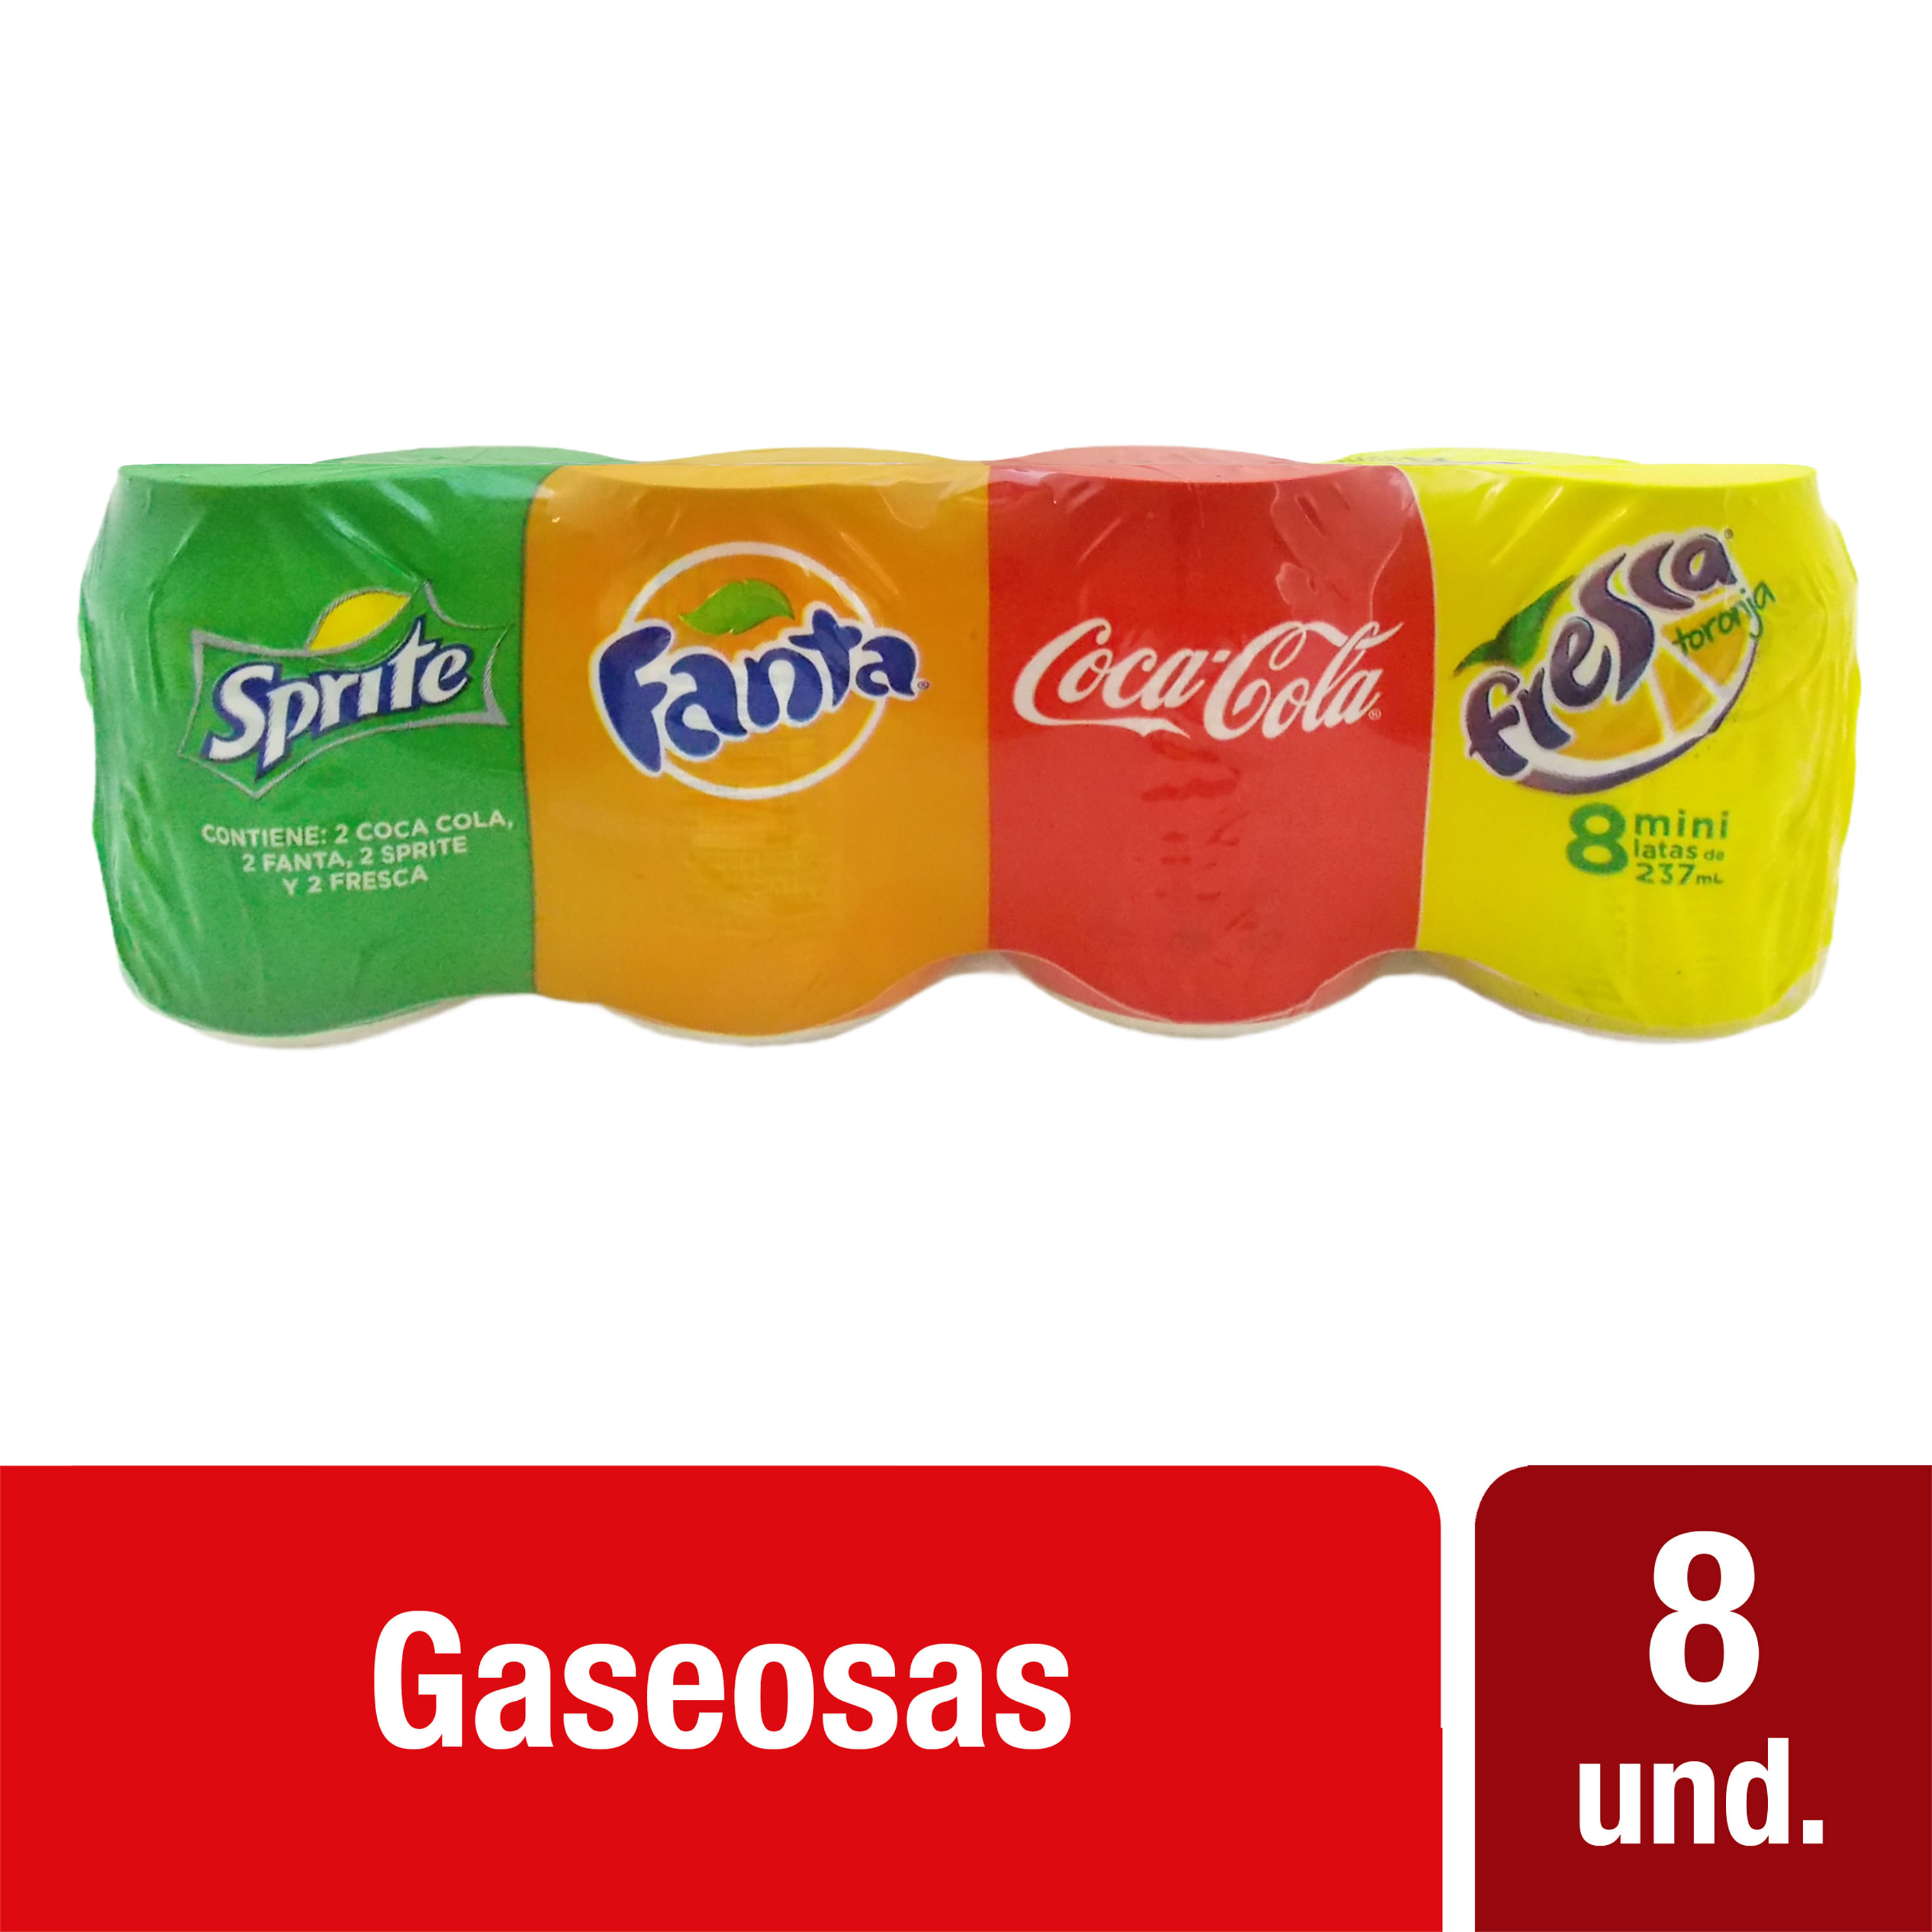 Gaseosa Coca Cola Regular Lata - 354 ml